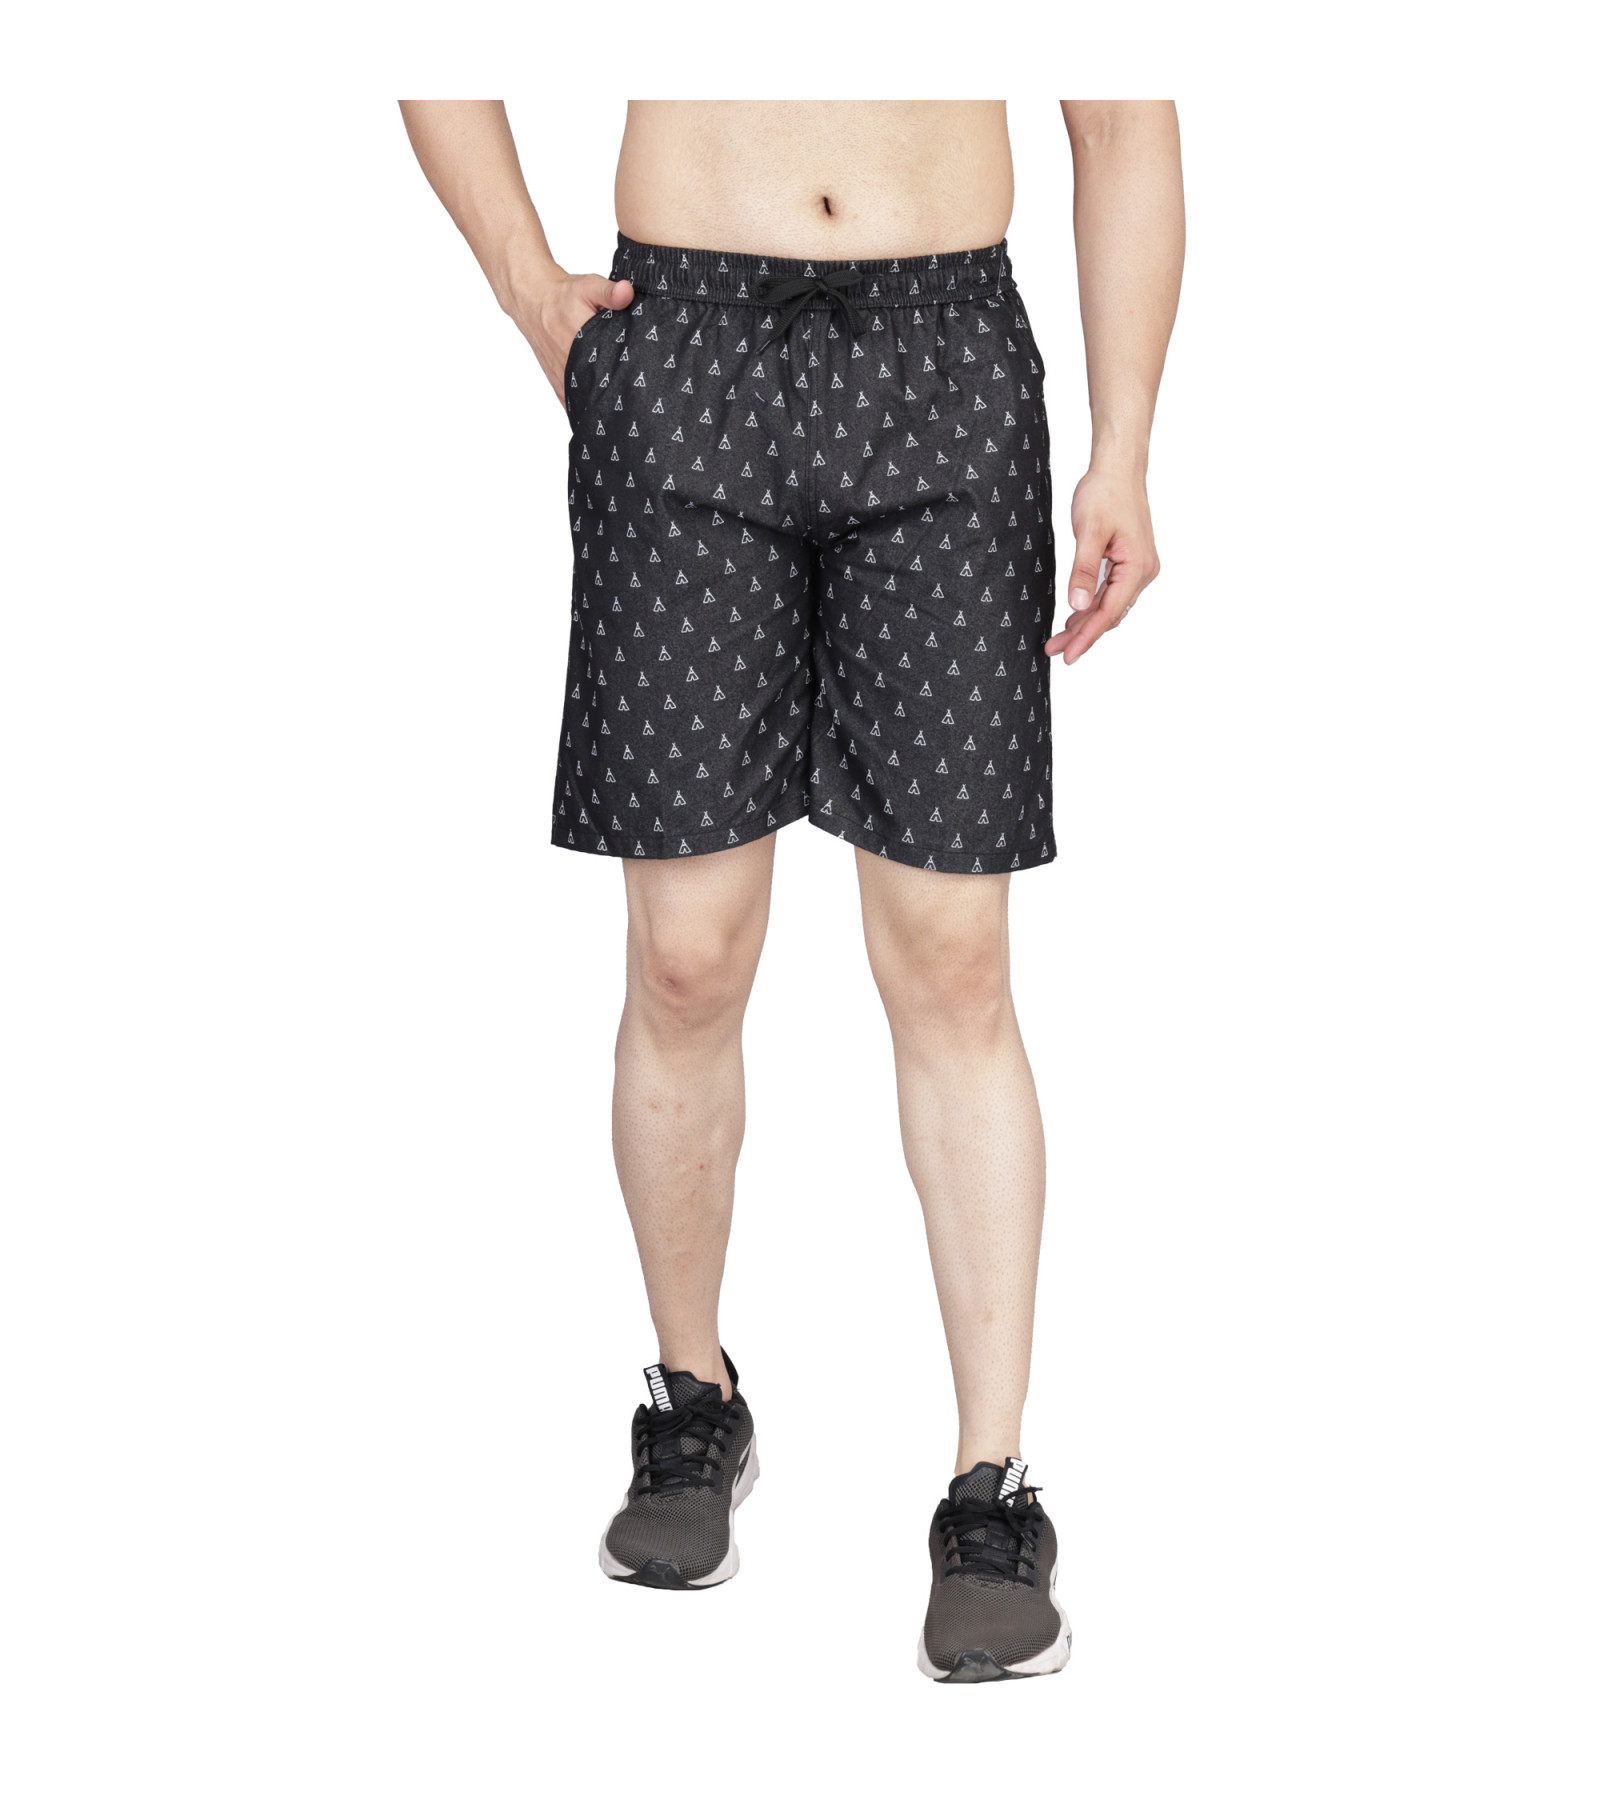 Abaranji Stylish Unique Printed Men's Half shorts